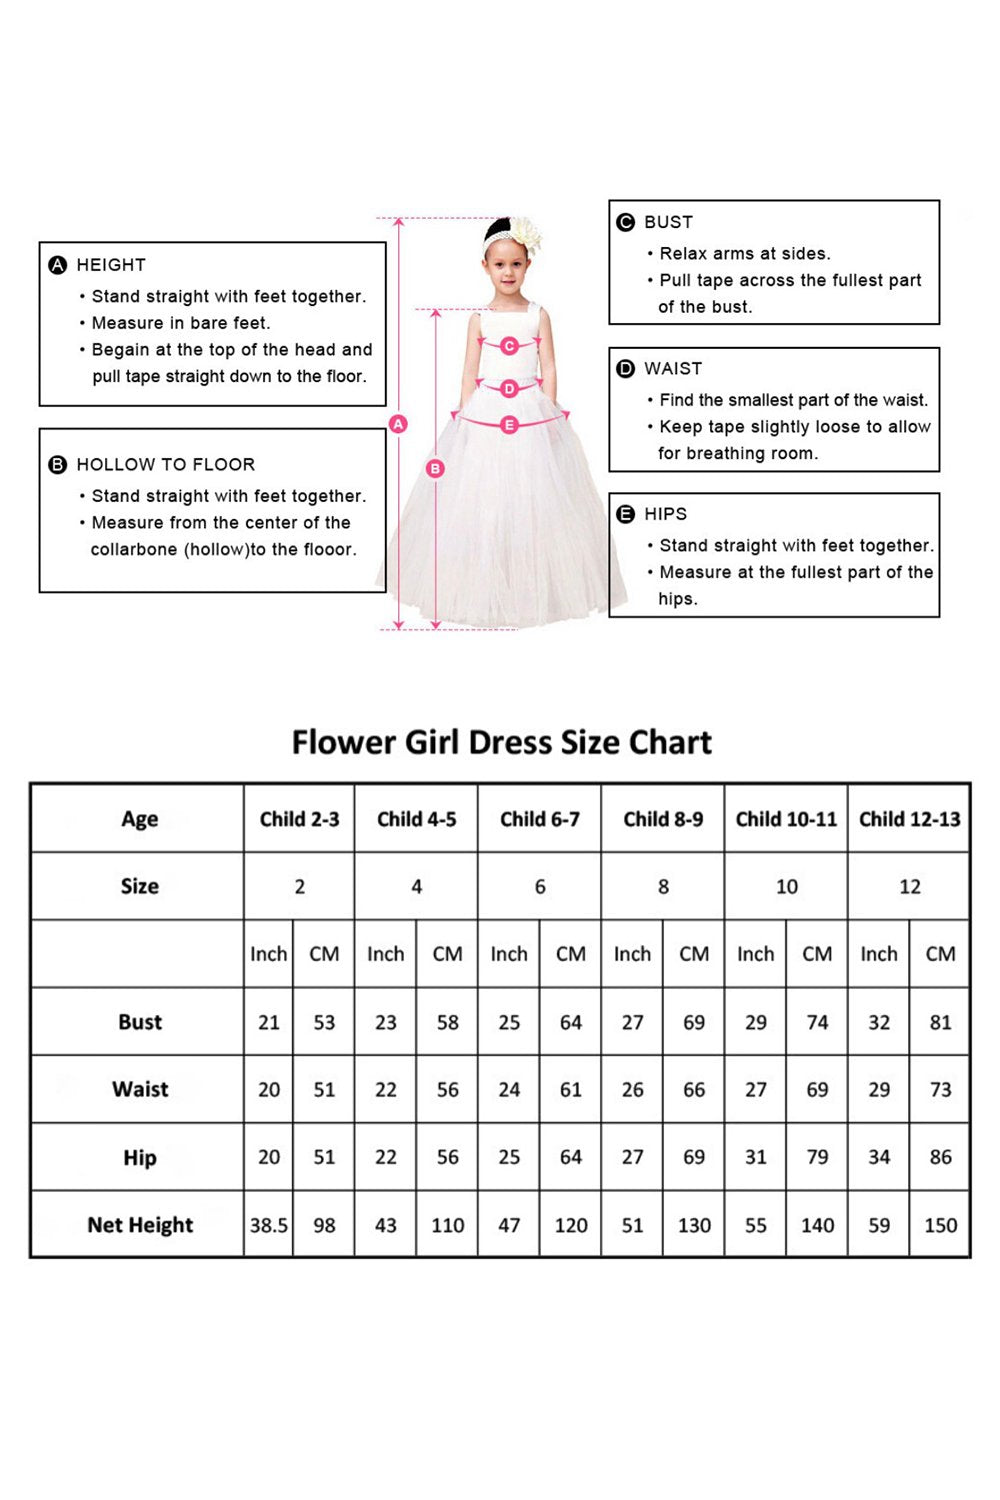 A-Line Floor Length Tulle Lace Flower Girl Dress CF0311